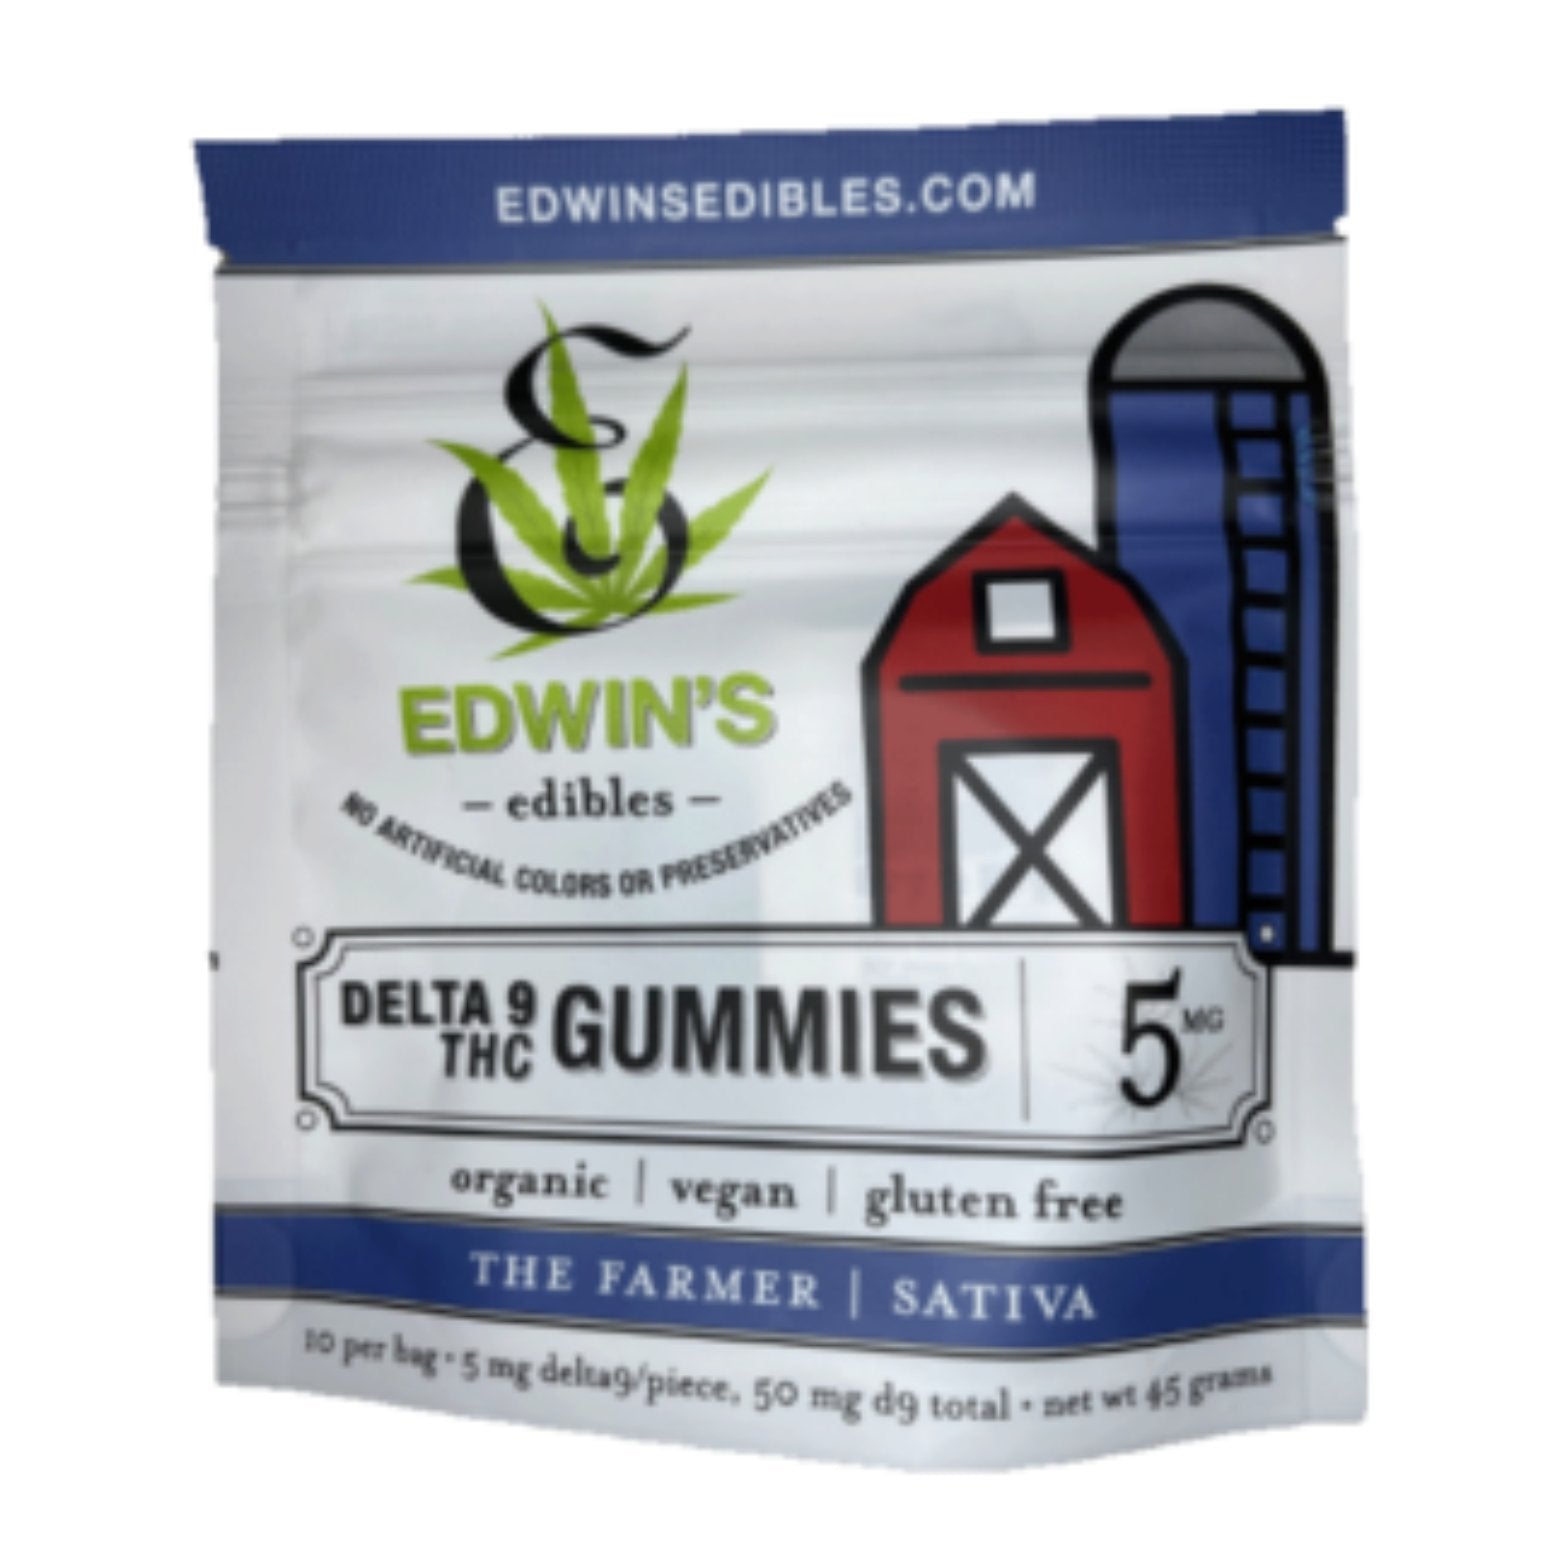 EDWINS EDIBLES Delta-9 THC Gummies 50mg THC (8 Flavors)